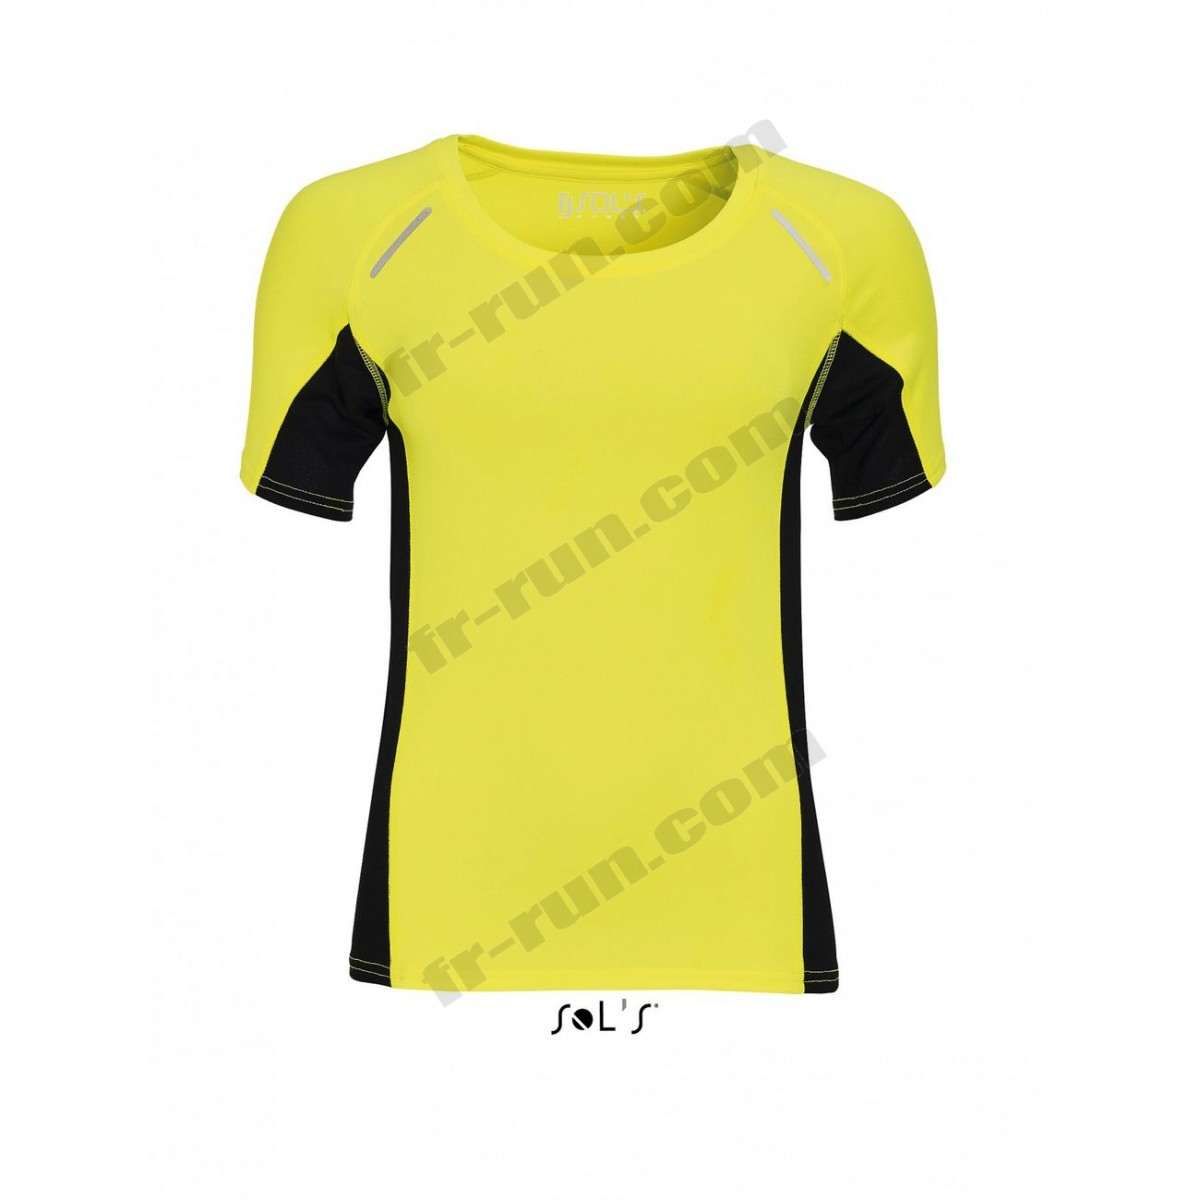 Sol's/running femme SOL'S t-shirt running manches courtes - Femme - 01415 - jaune fluo ◇◇◇ Pas Cher Du Tout - -1